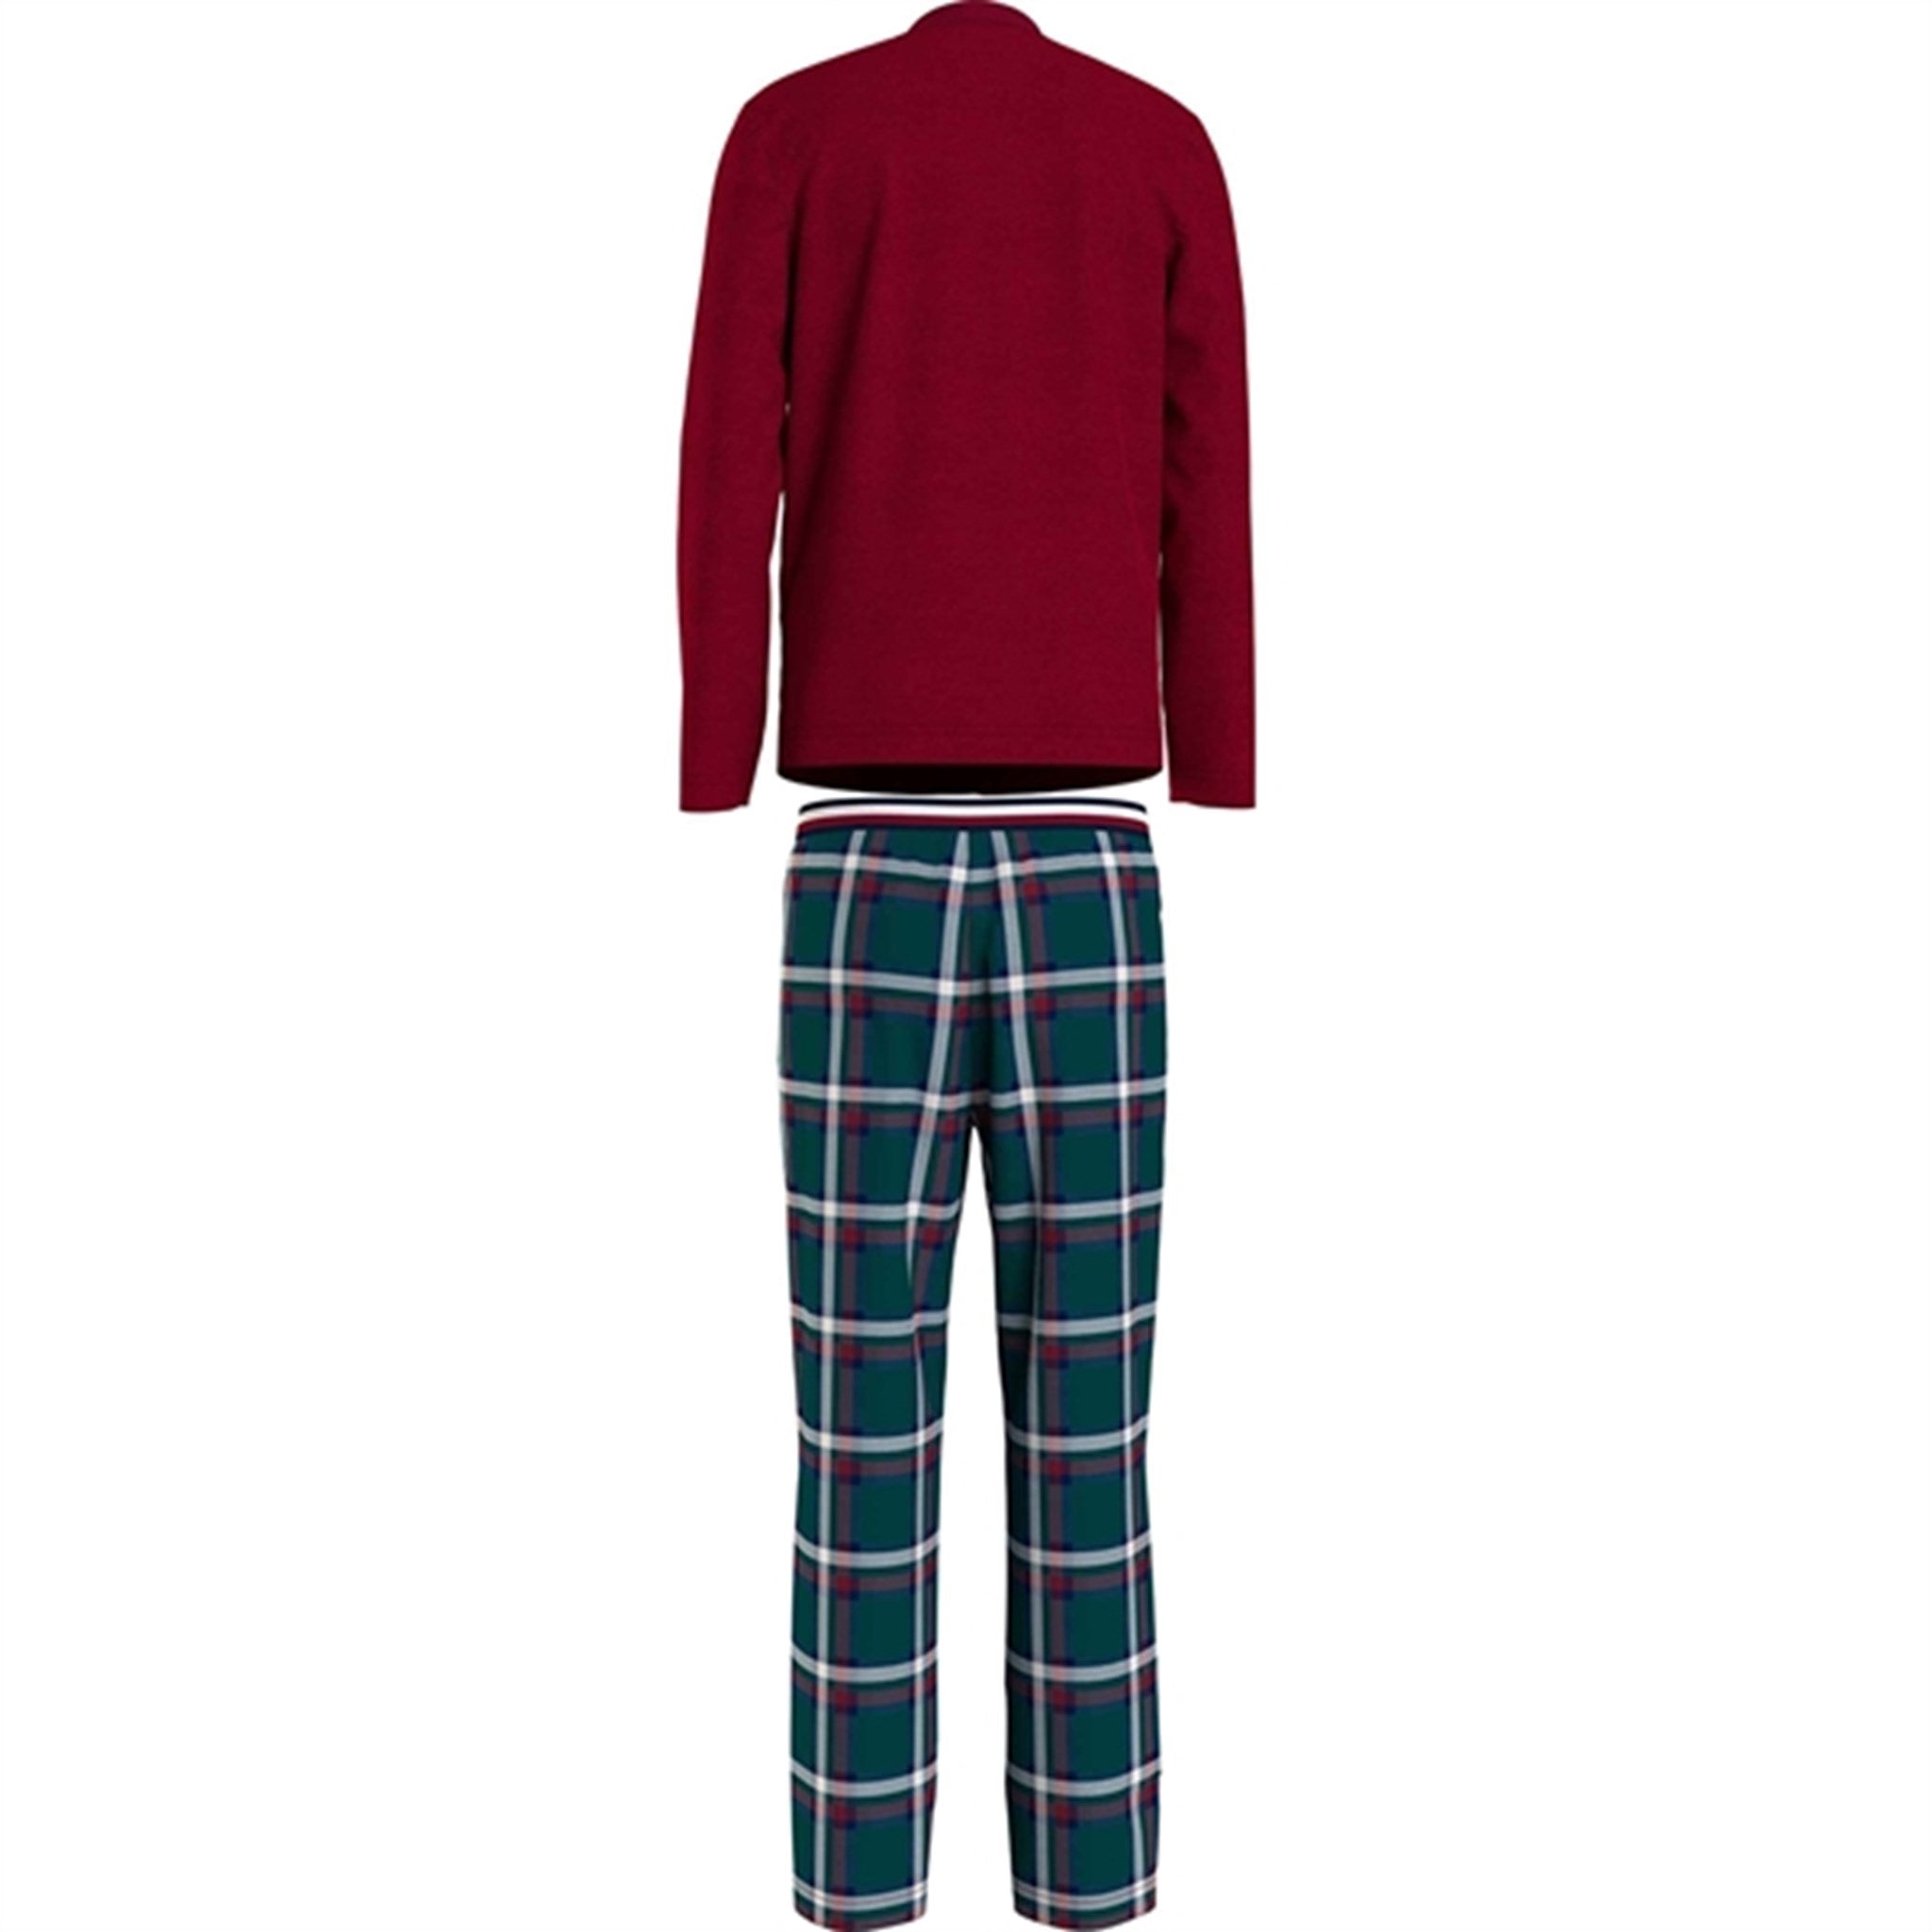 Tommy Hilfiger Pyjamas Rg/ Green Global Stripe Ck 3